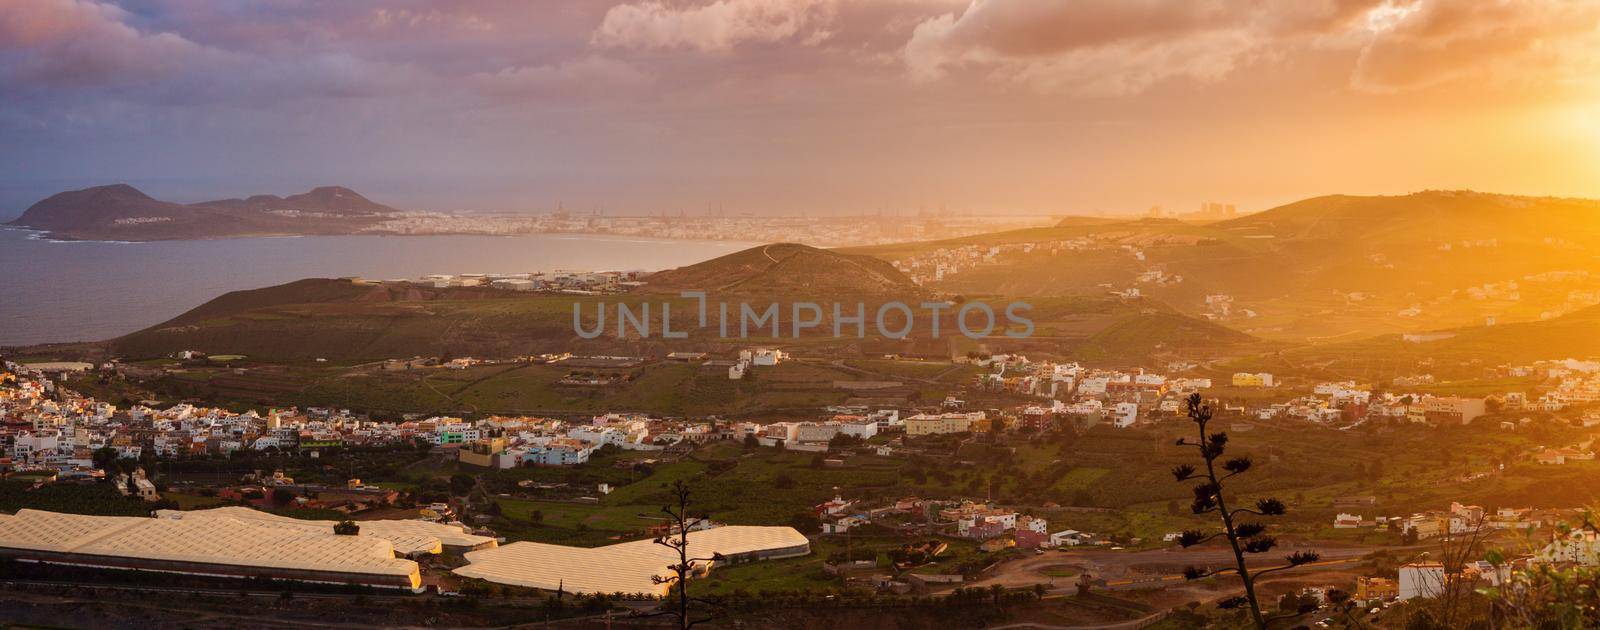 Las Palmas de Gran Canaria panorama by benkrut